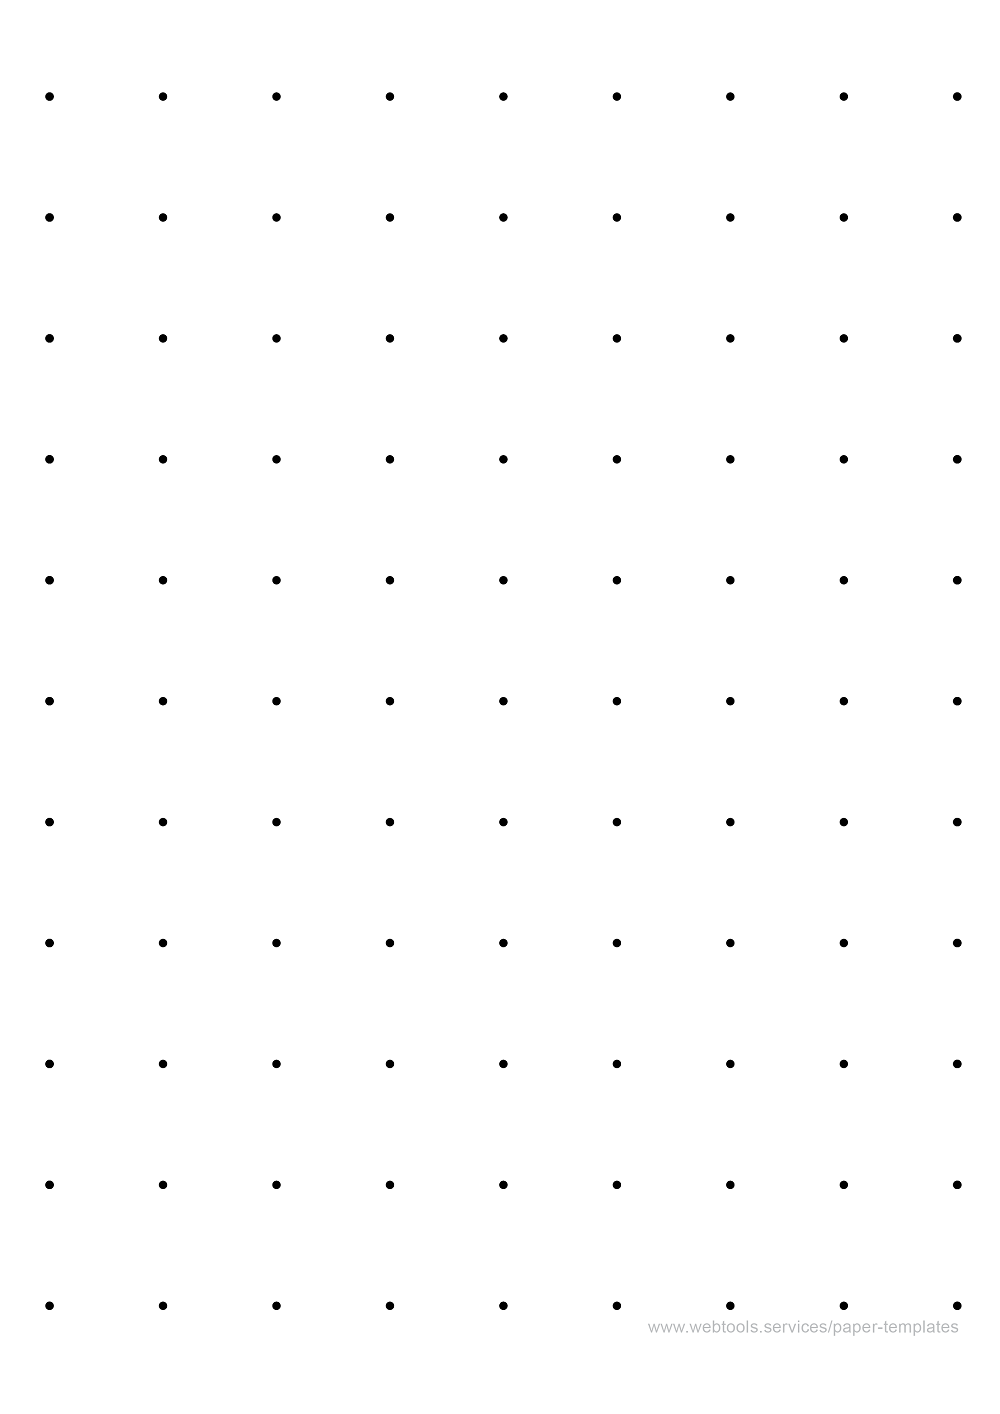 Dot Paper - One Dot Per Inch